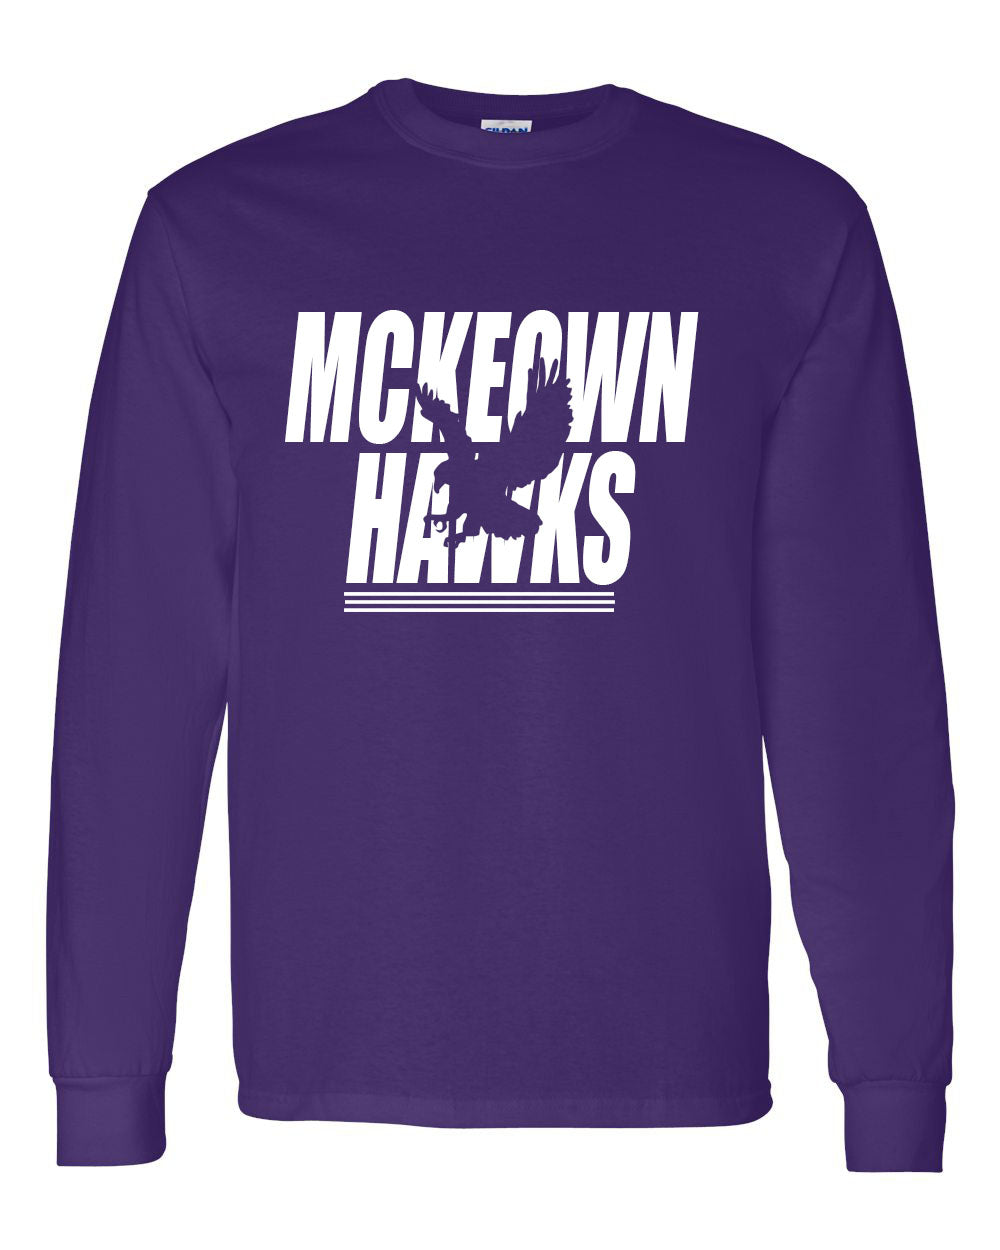 McKeown Hawks Long Sleeve Shirt